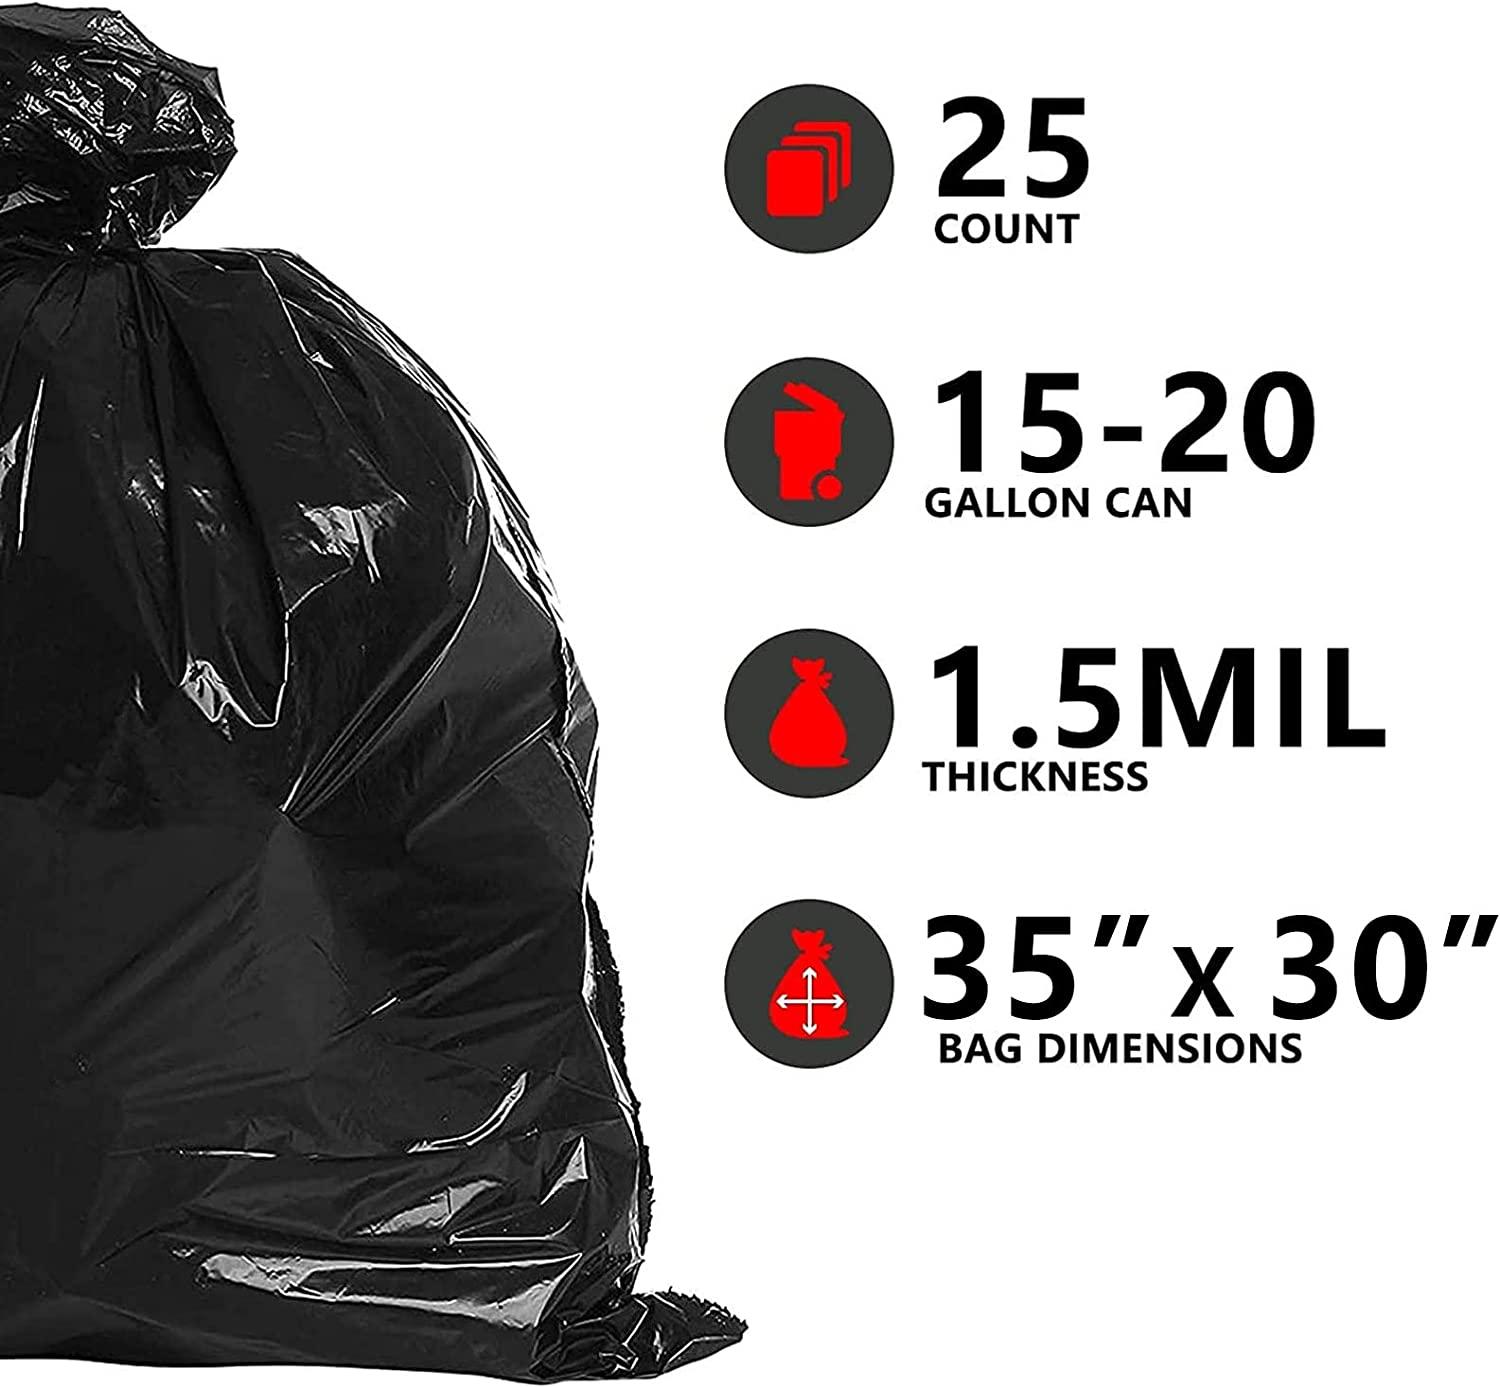 Trash Bags, (100 Count) Large Black Heavy Duty Garbage Bags, Men's